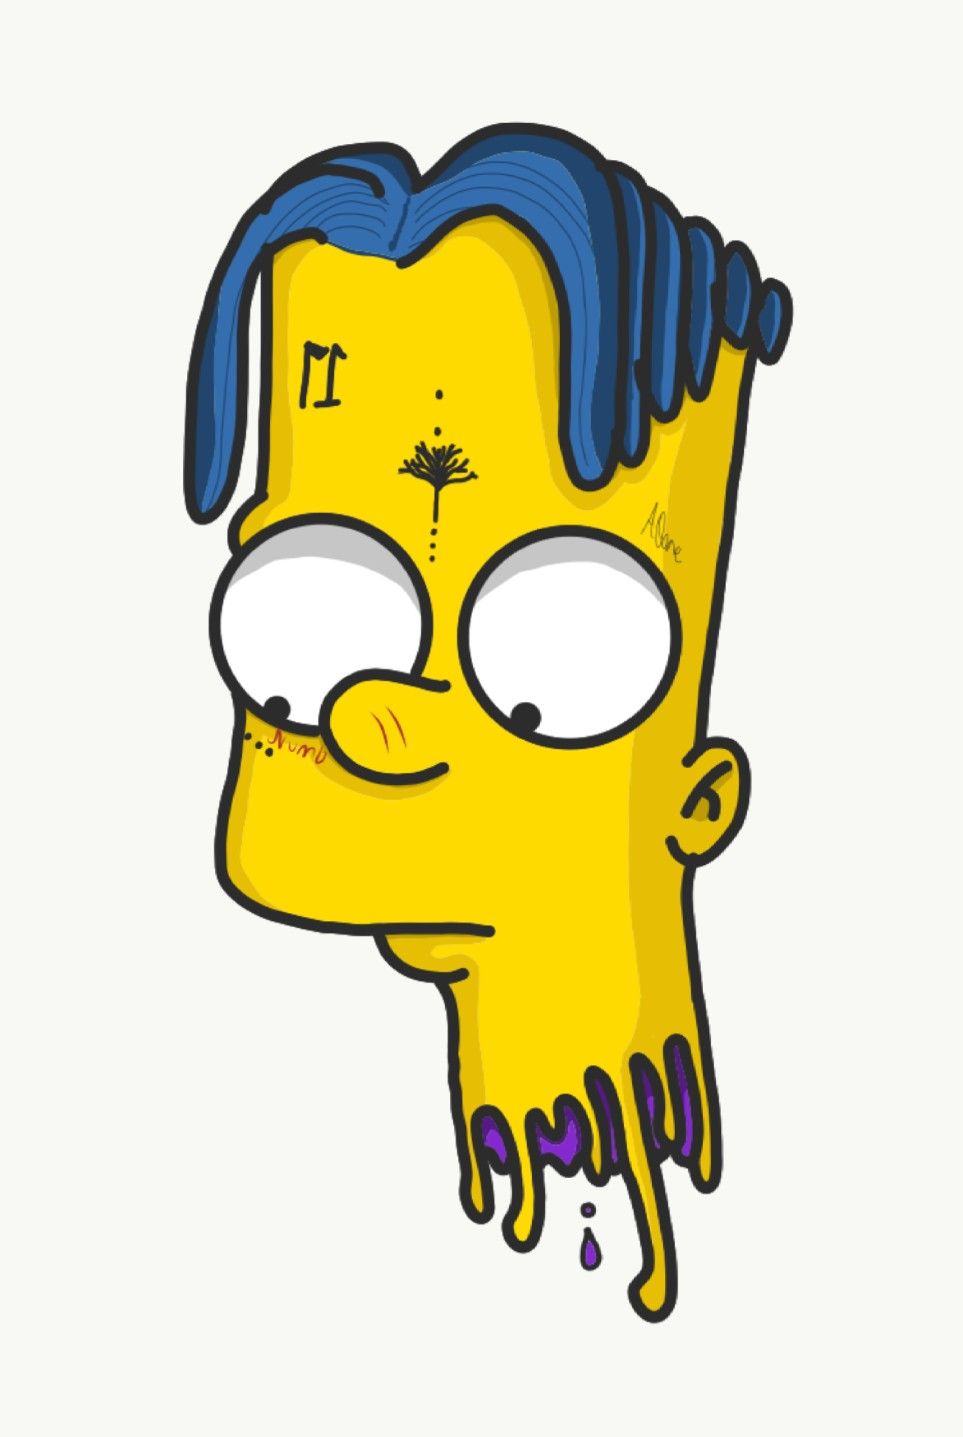 Bart Simpson XXXtentacion Wallpapers - Wallpaper Cave